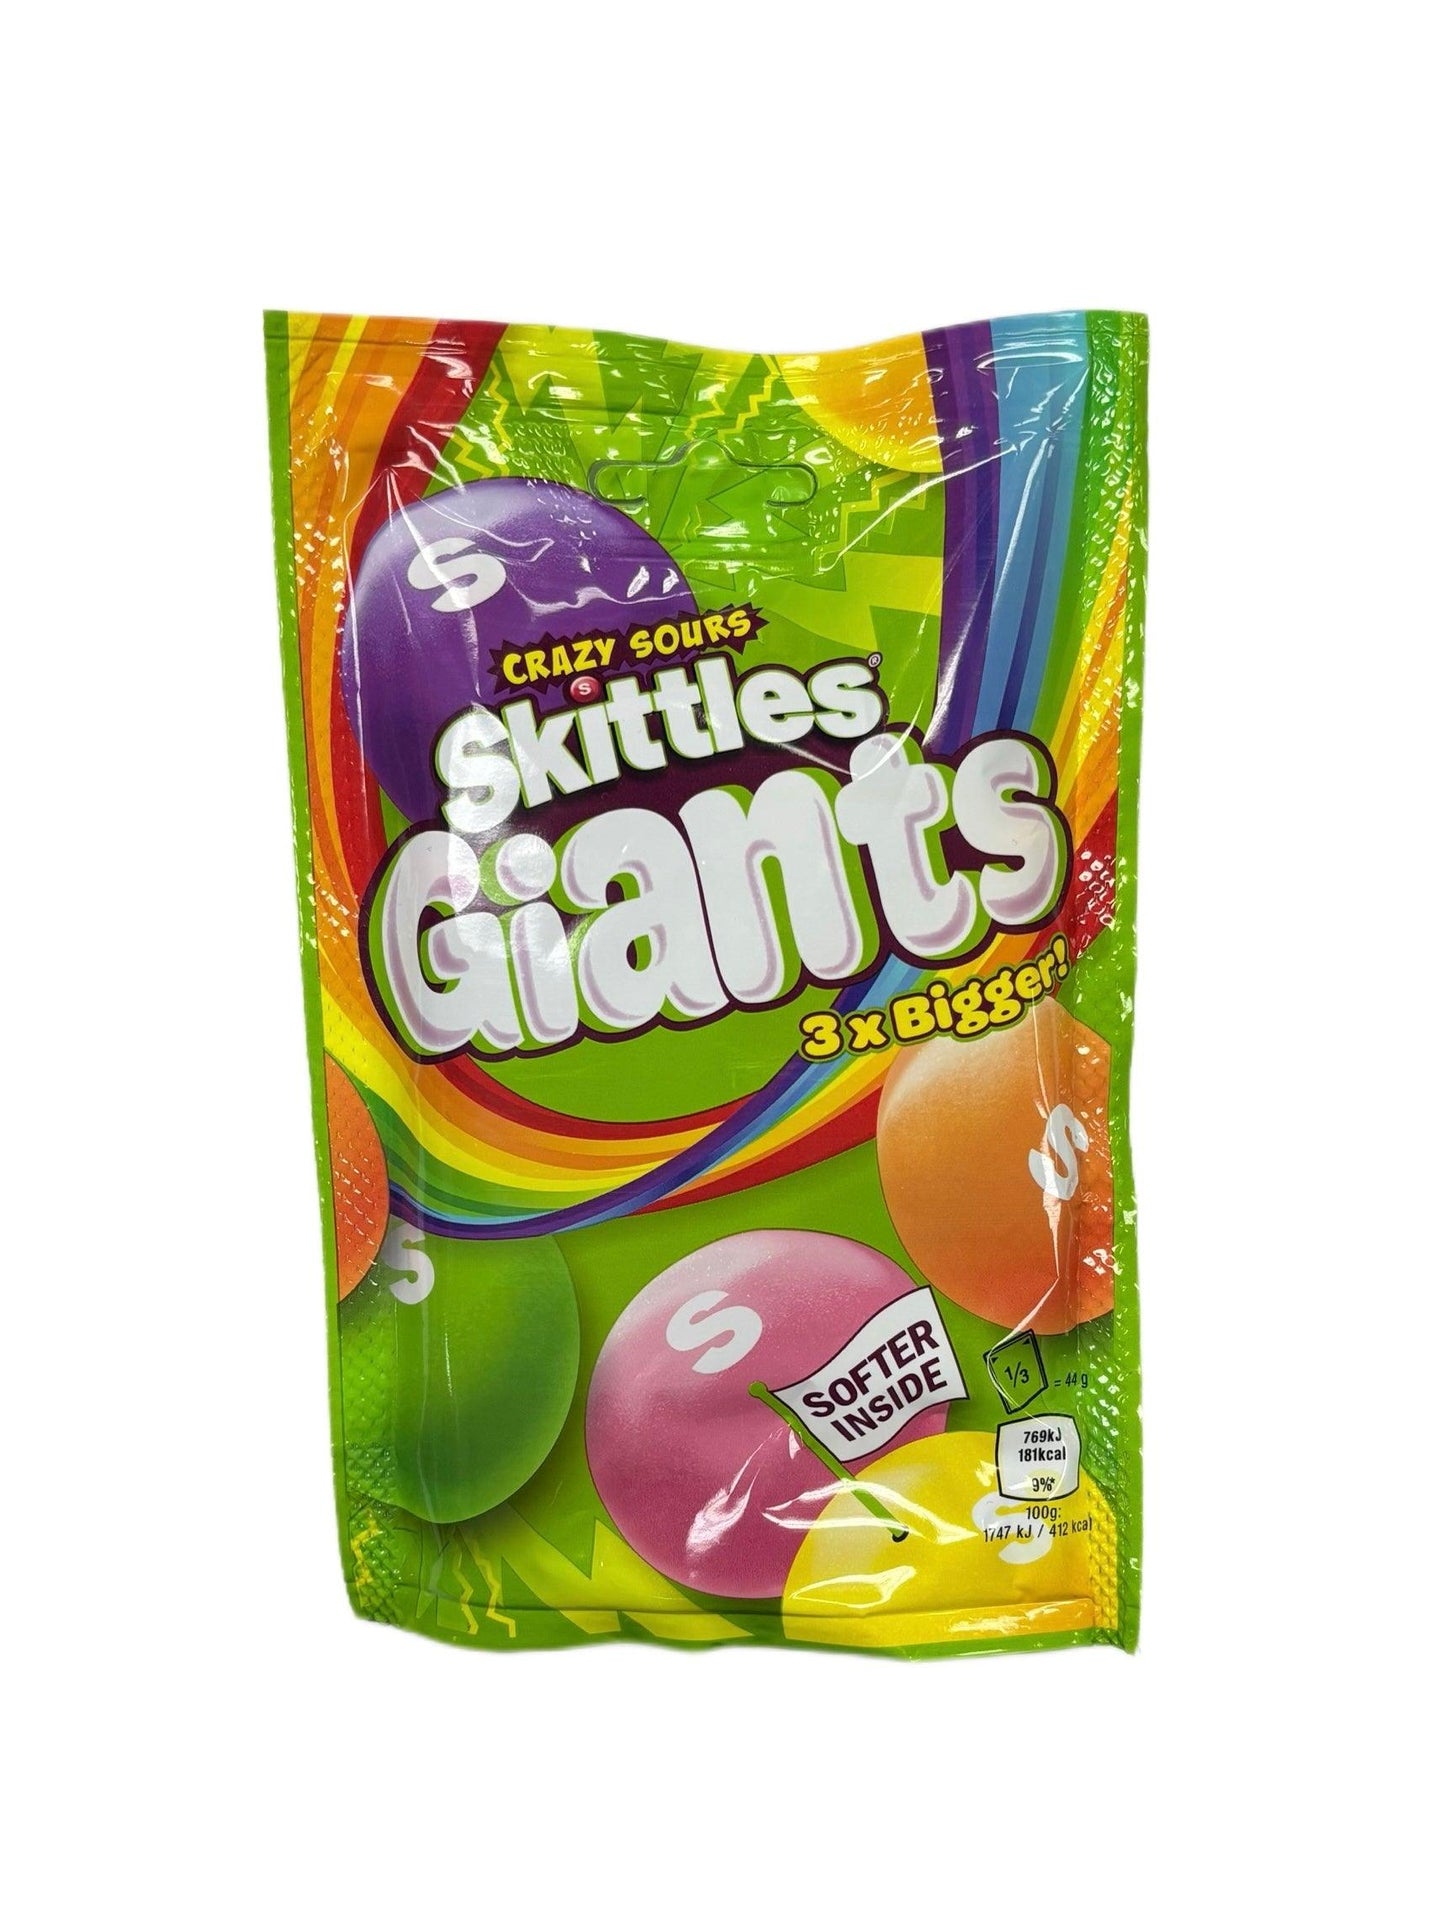 Skittles Giants Crazy Sours -UK - Extreme Snacks